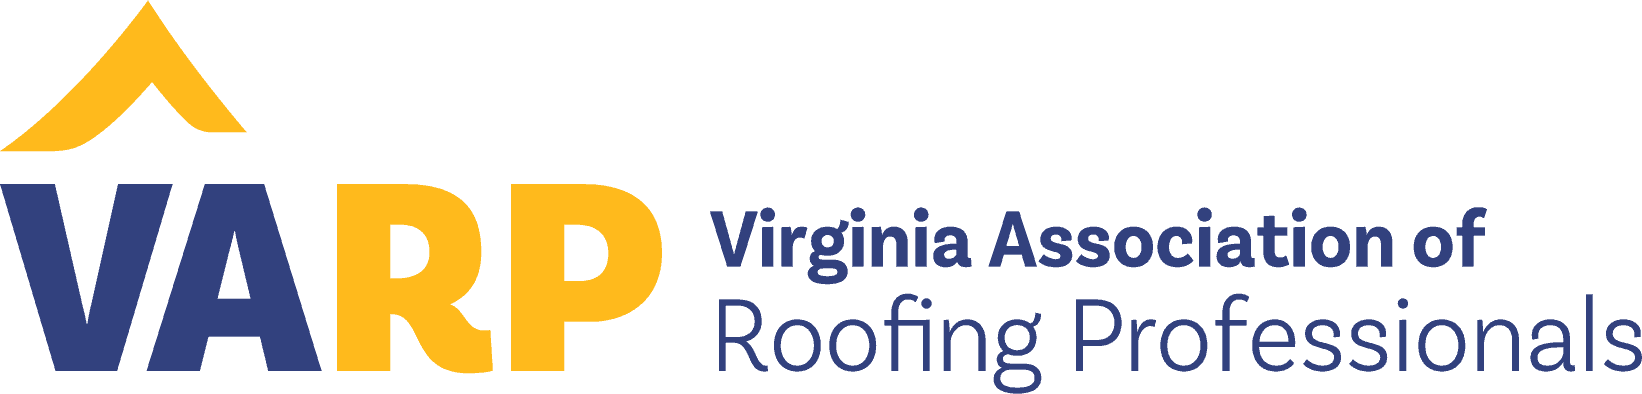 Virginia association of roofing professionals logo